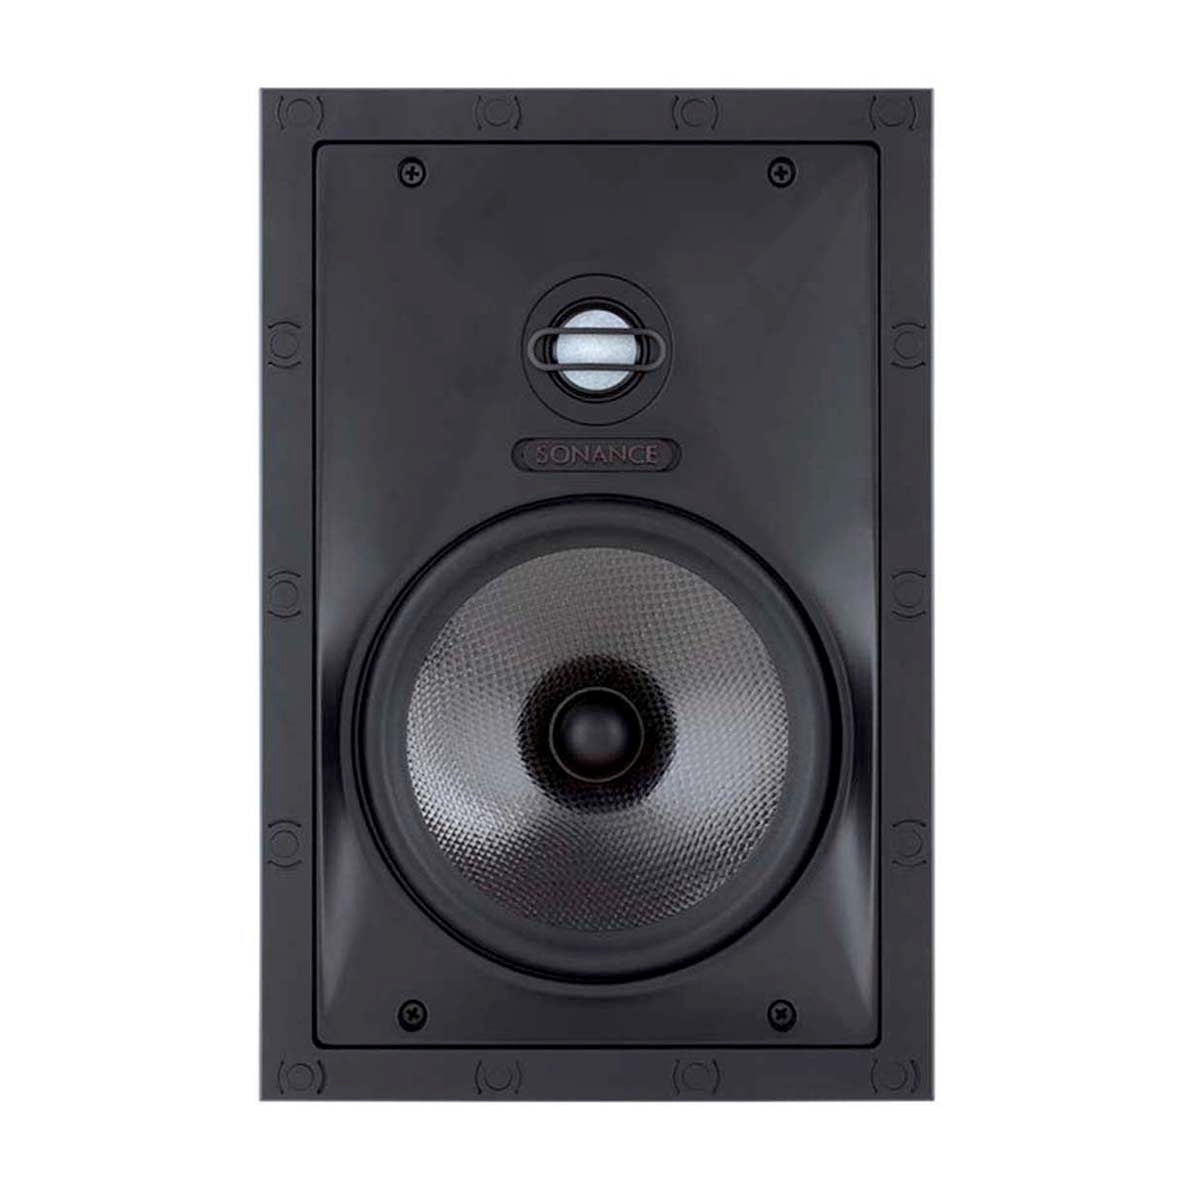 Sonance VP48 4.5" Rectangular Speakers pair